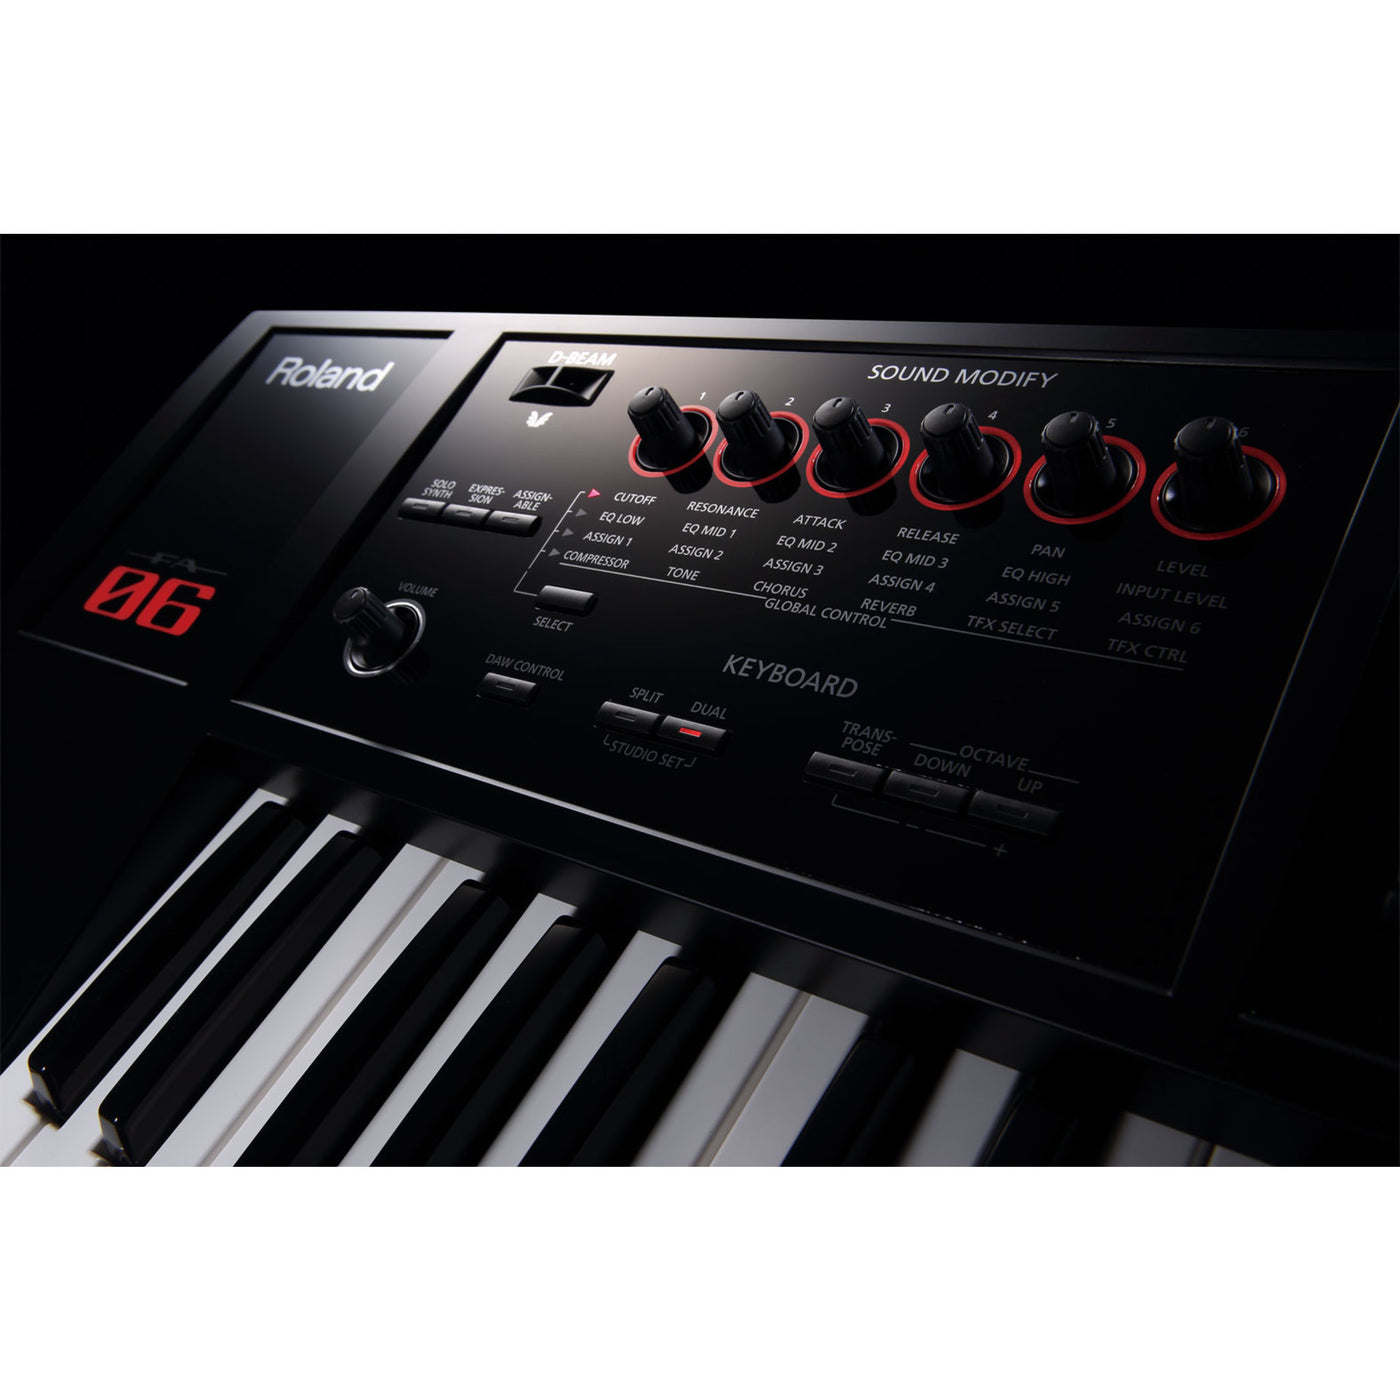 Roland Fantom 06 Synthesizer Keyboard Workstation - 61 Keys